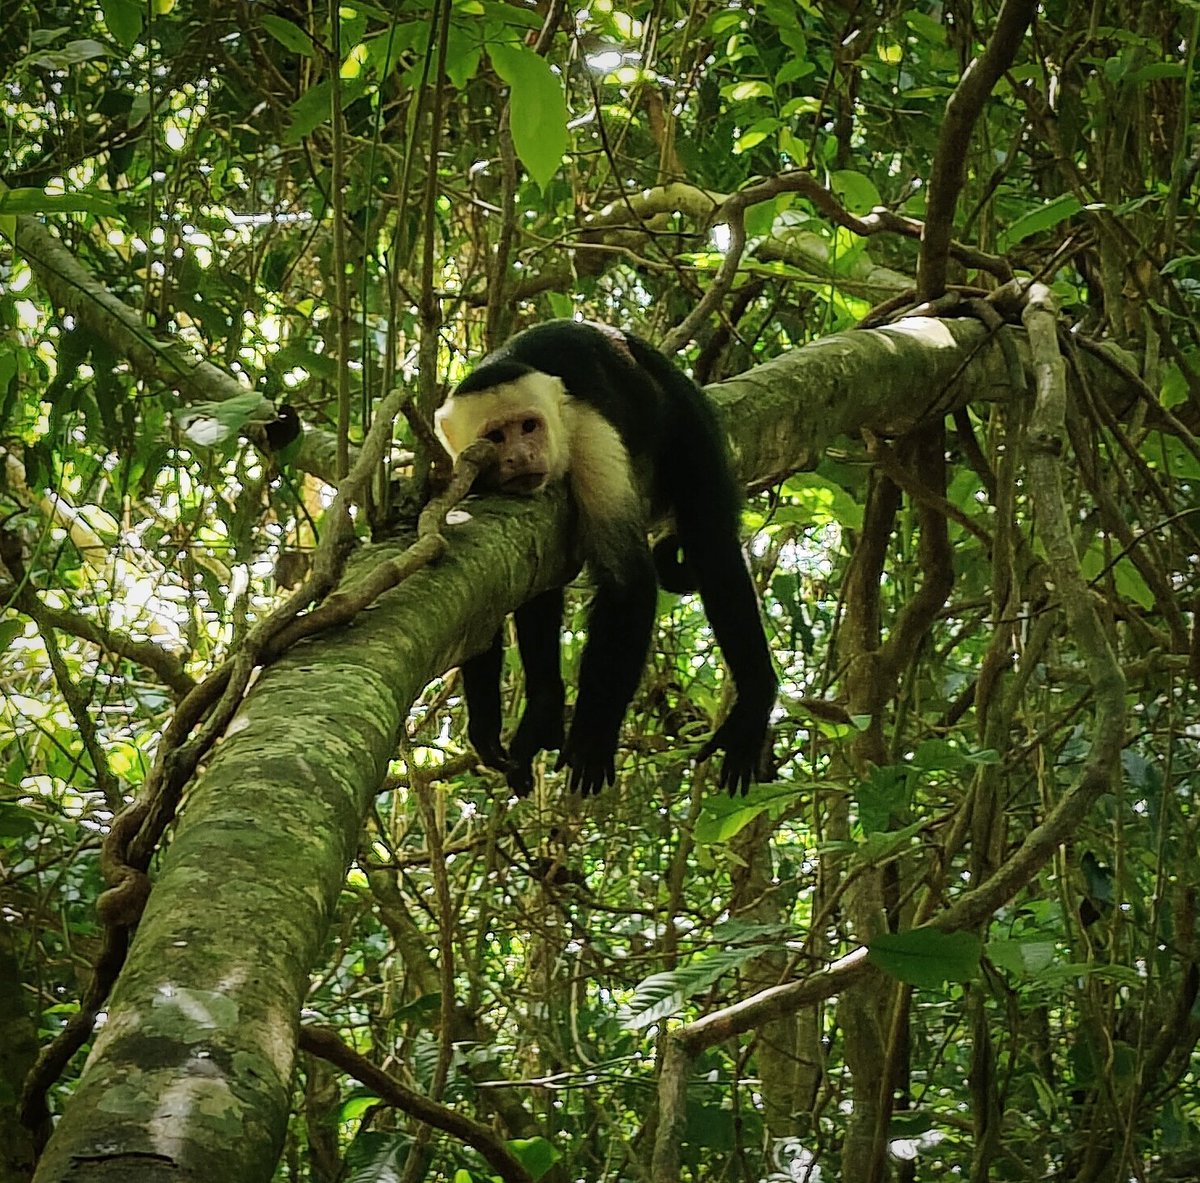 Apparently the monkeys had a rough week too... looking forward to a #puravida weekend! 🐒❤️
#tgif #Friyay #manuelantonio #costarica #thisiscostarica #capuchin
#artadventuretravel #artnomads